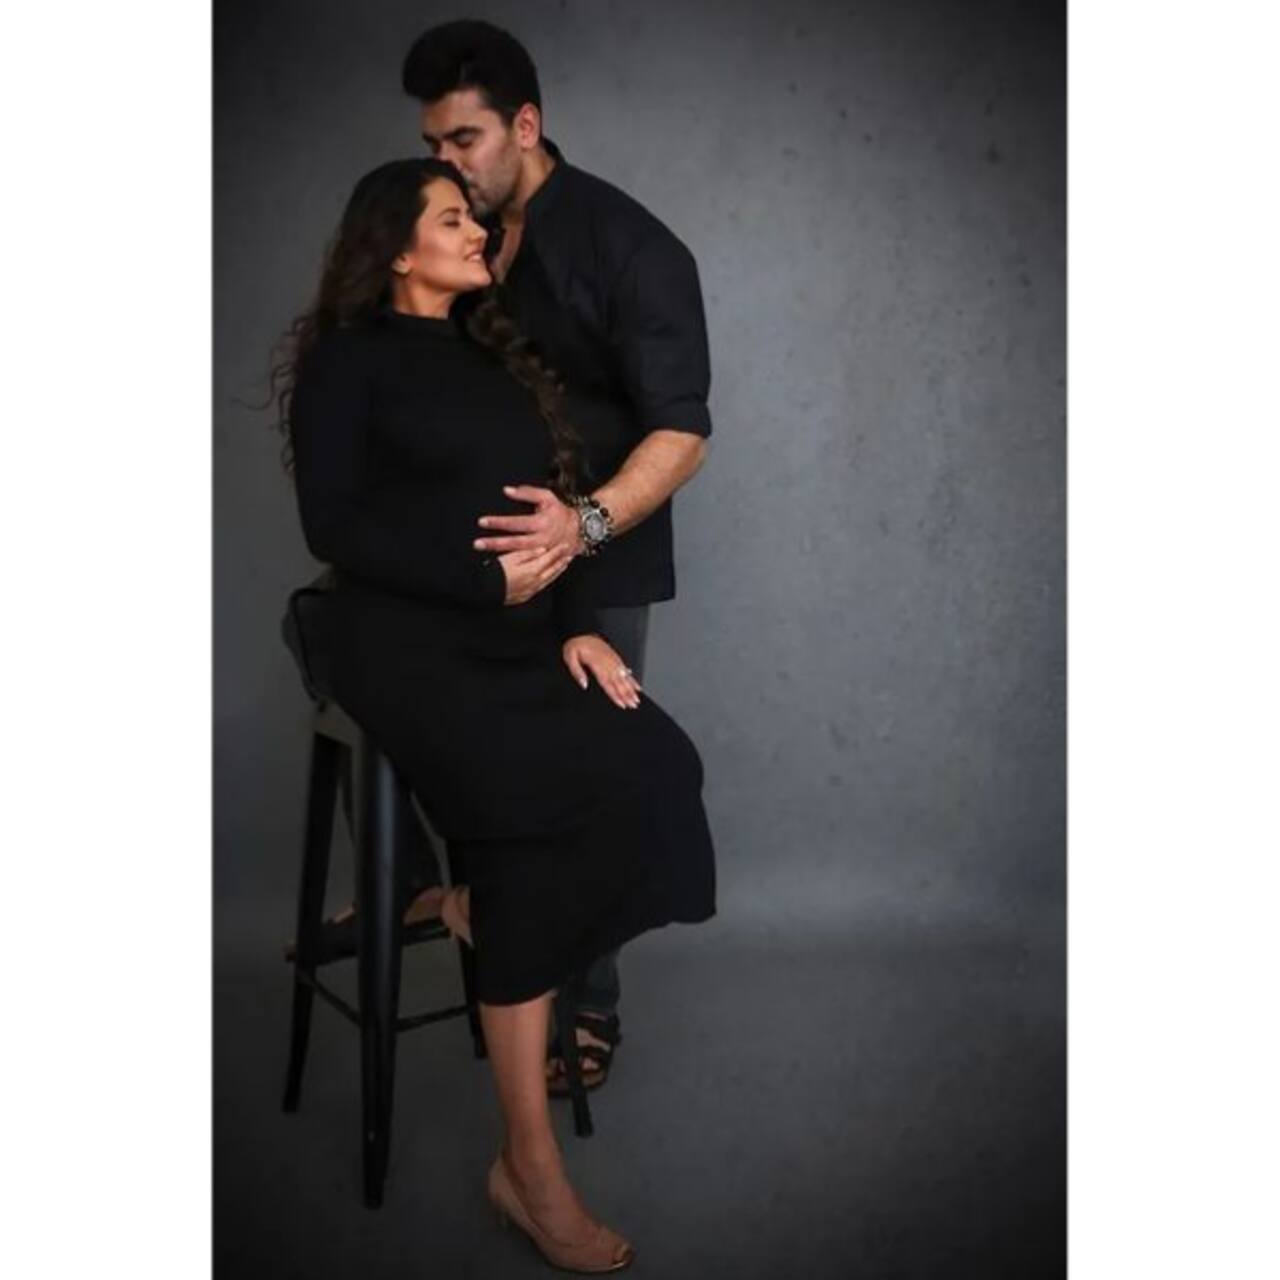 Kratika Sengar's maternity photoshoot